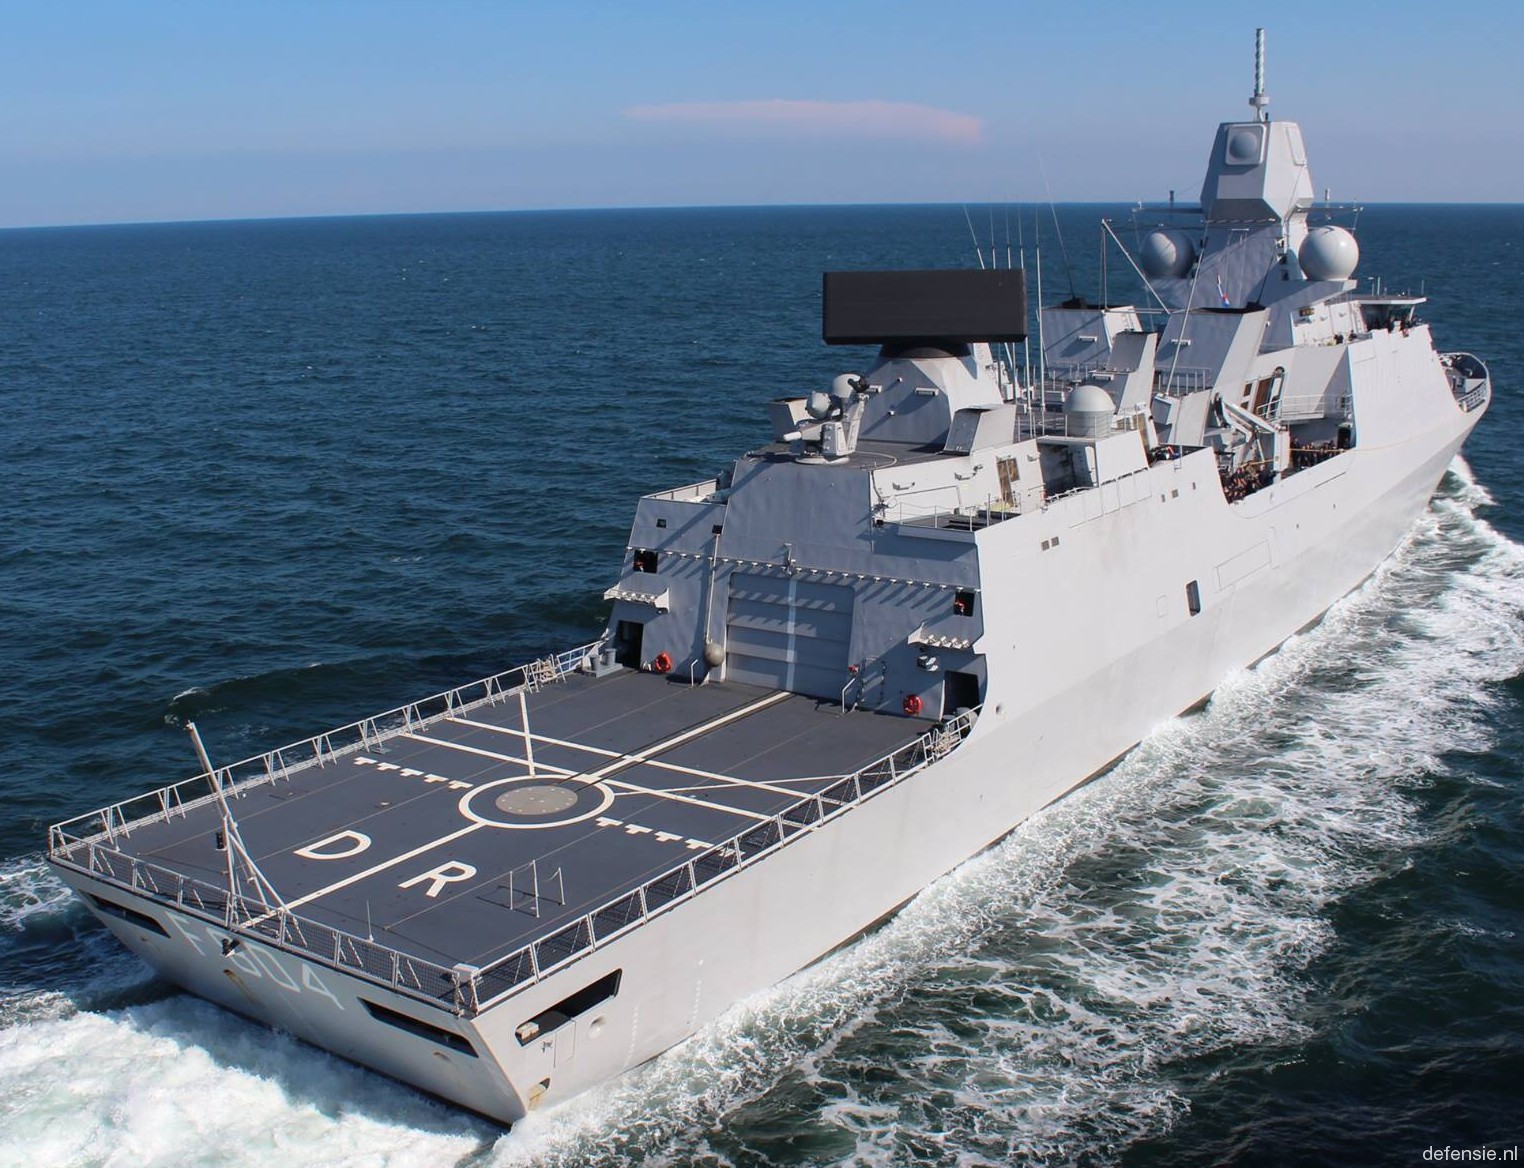 f-804 hnlms de ruyter guided missile frigate ffg lcf royal netherlands navy 20